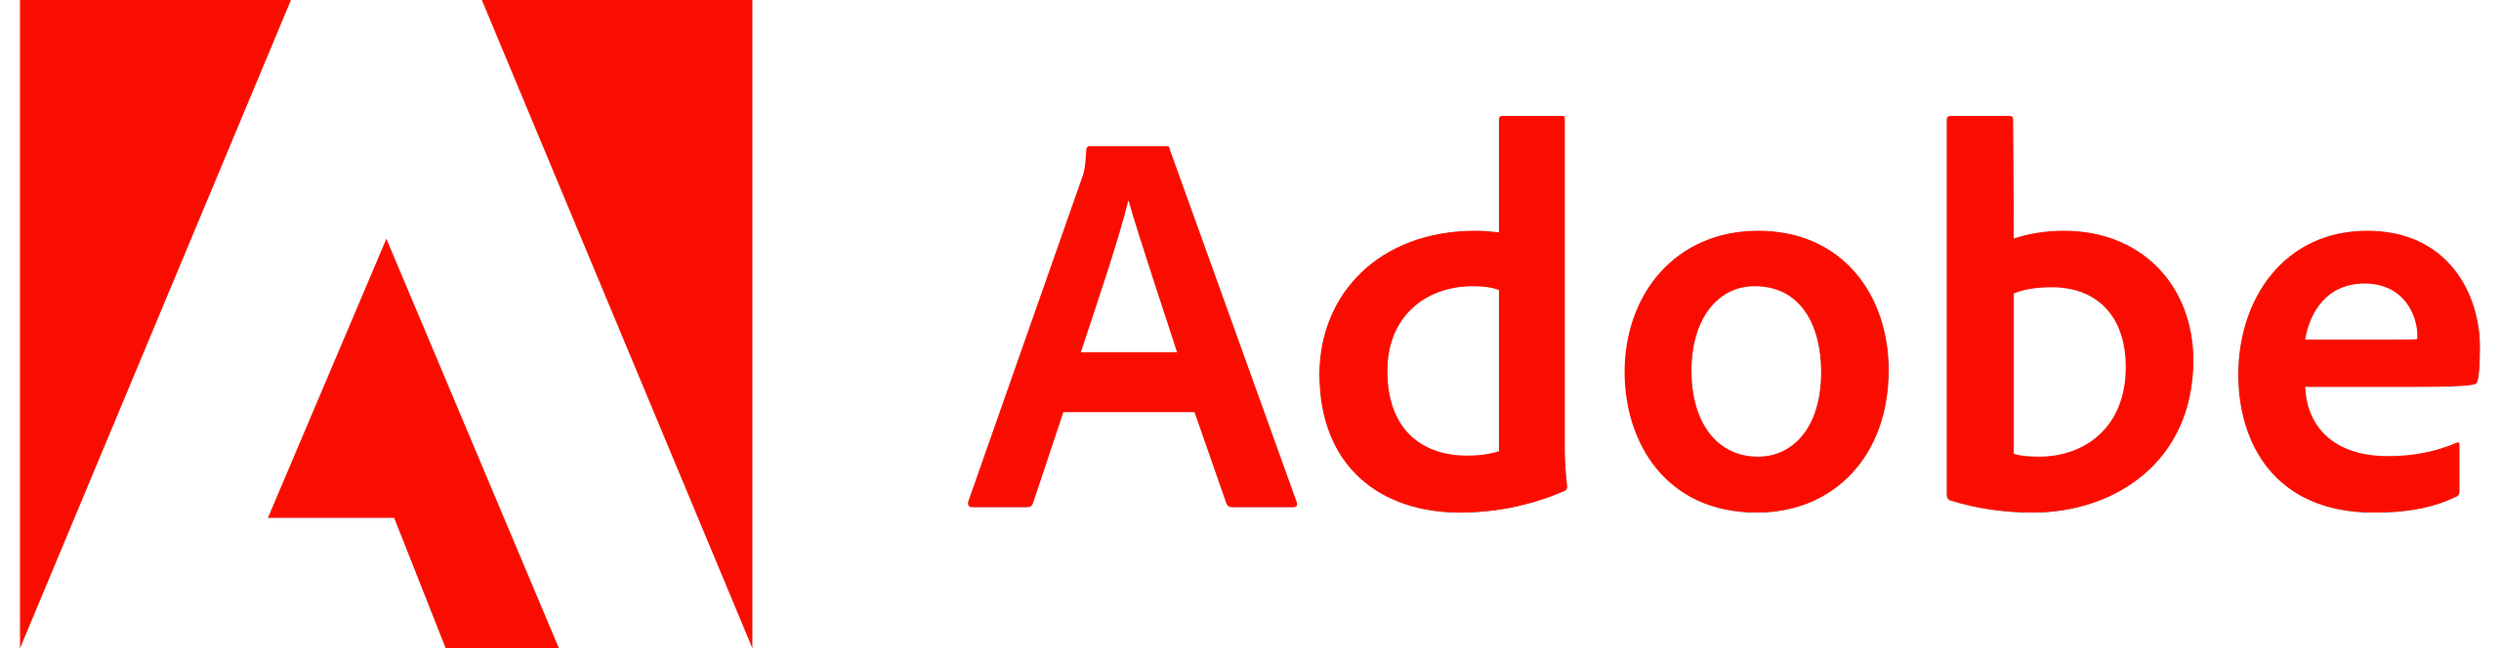 Adobe_Corporate_logo.svg.png